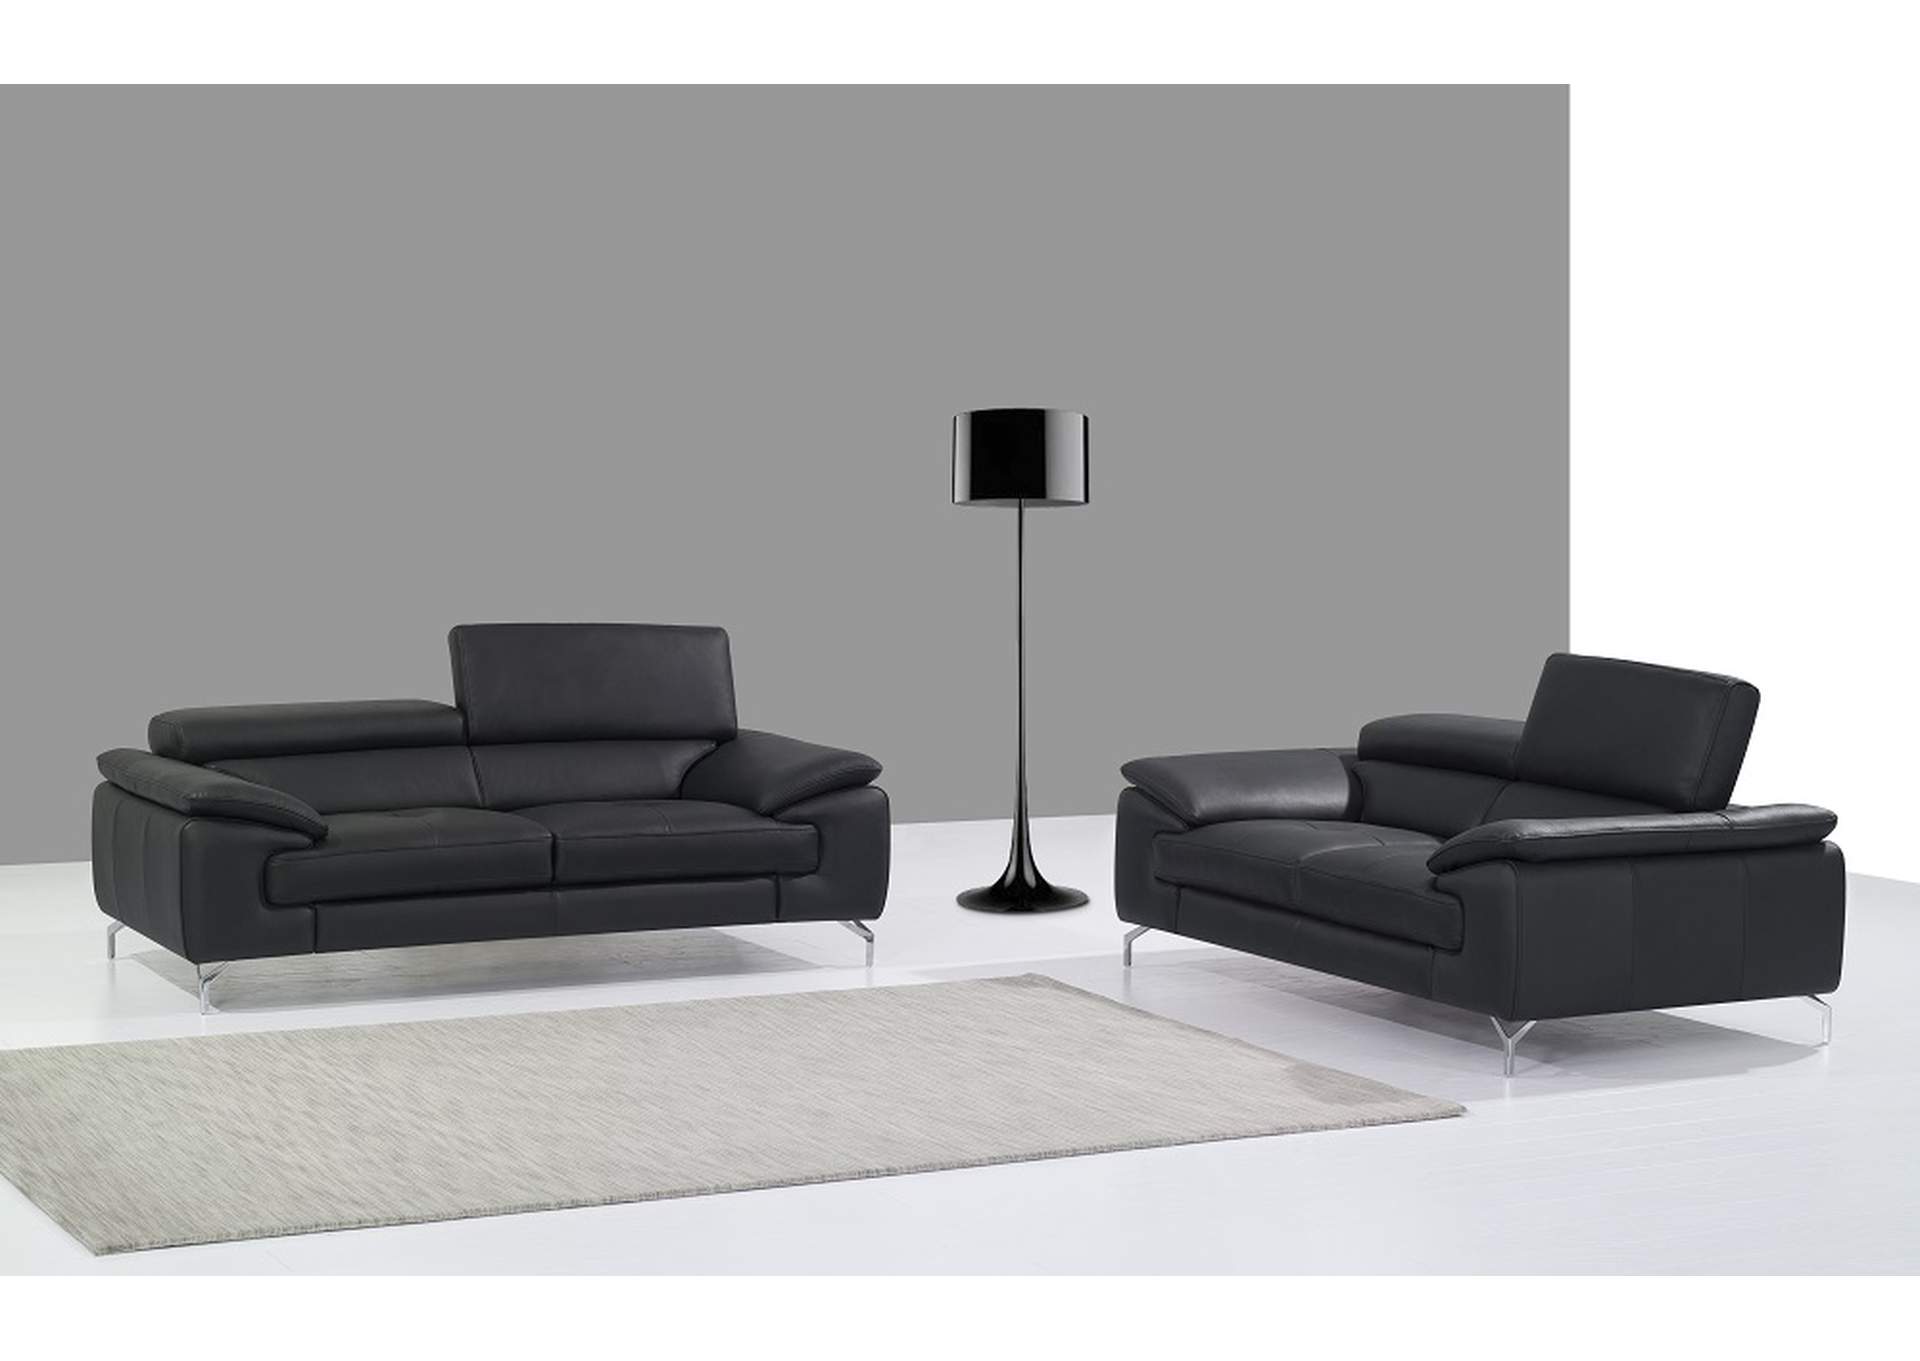 A973 Italian Leather Sofa in Black,J&M Furniture